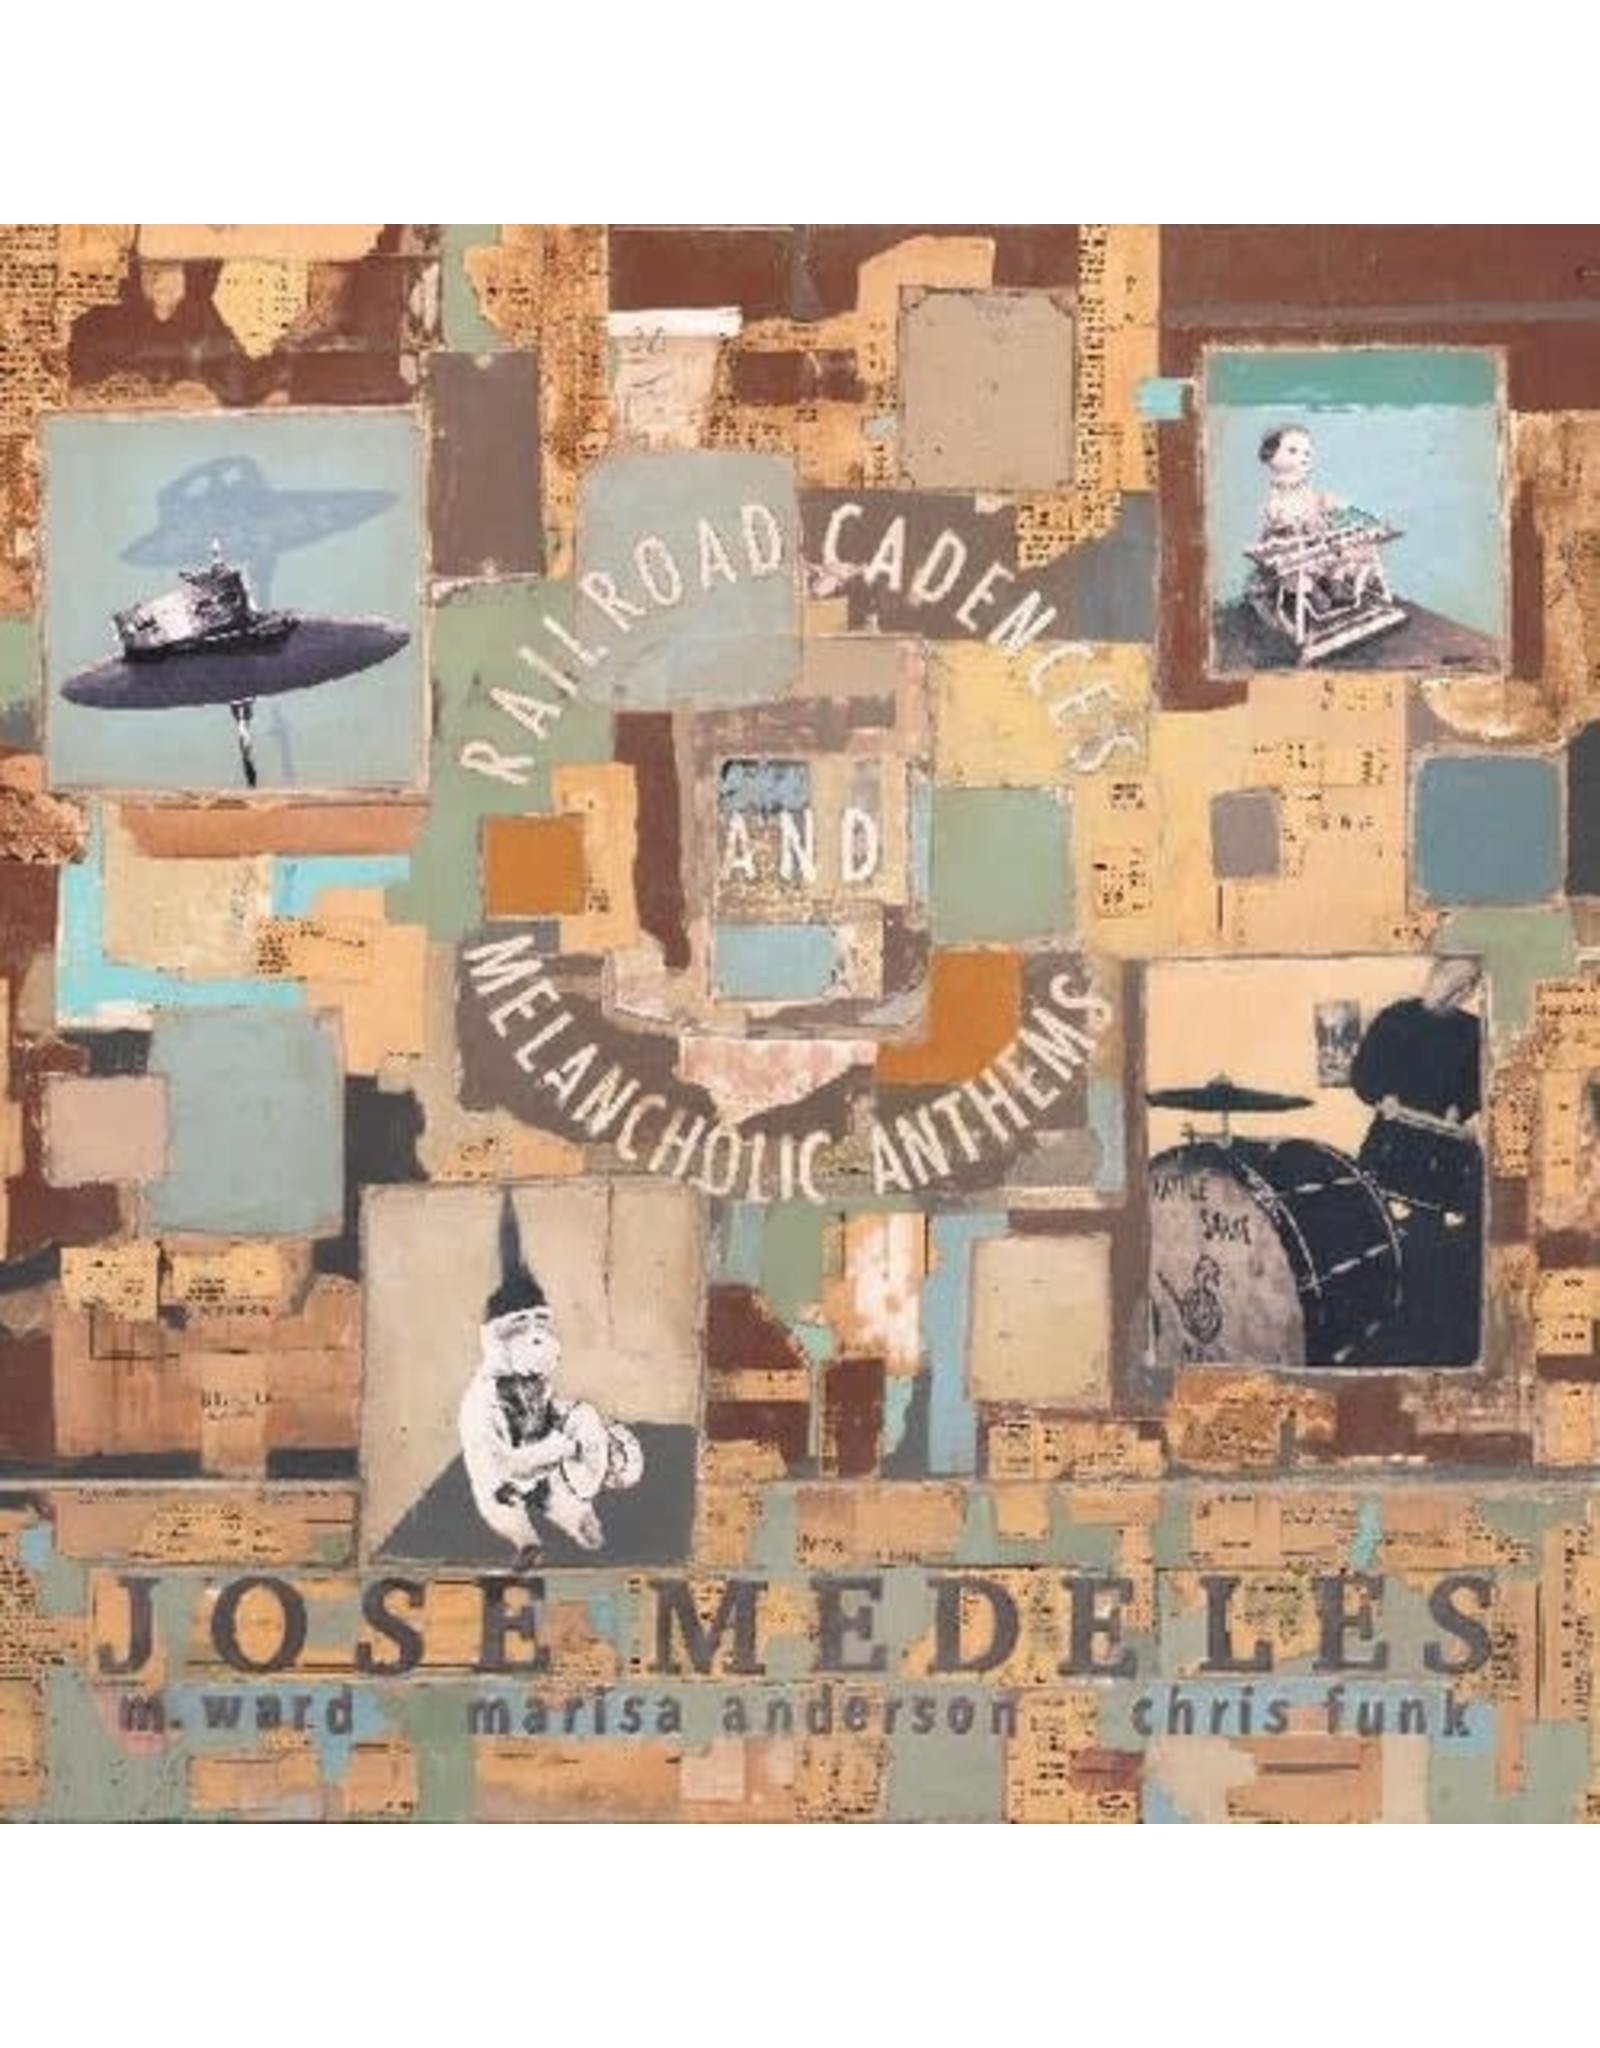 New Vinyl Jose Medeles, M. Ward, Marisa Anderson, Chris Funk - Railroad Cadences & Melancholic Anthems (Clear) LP